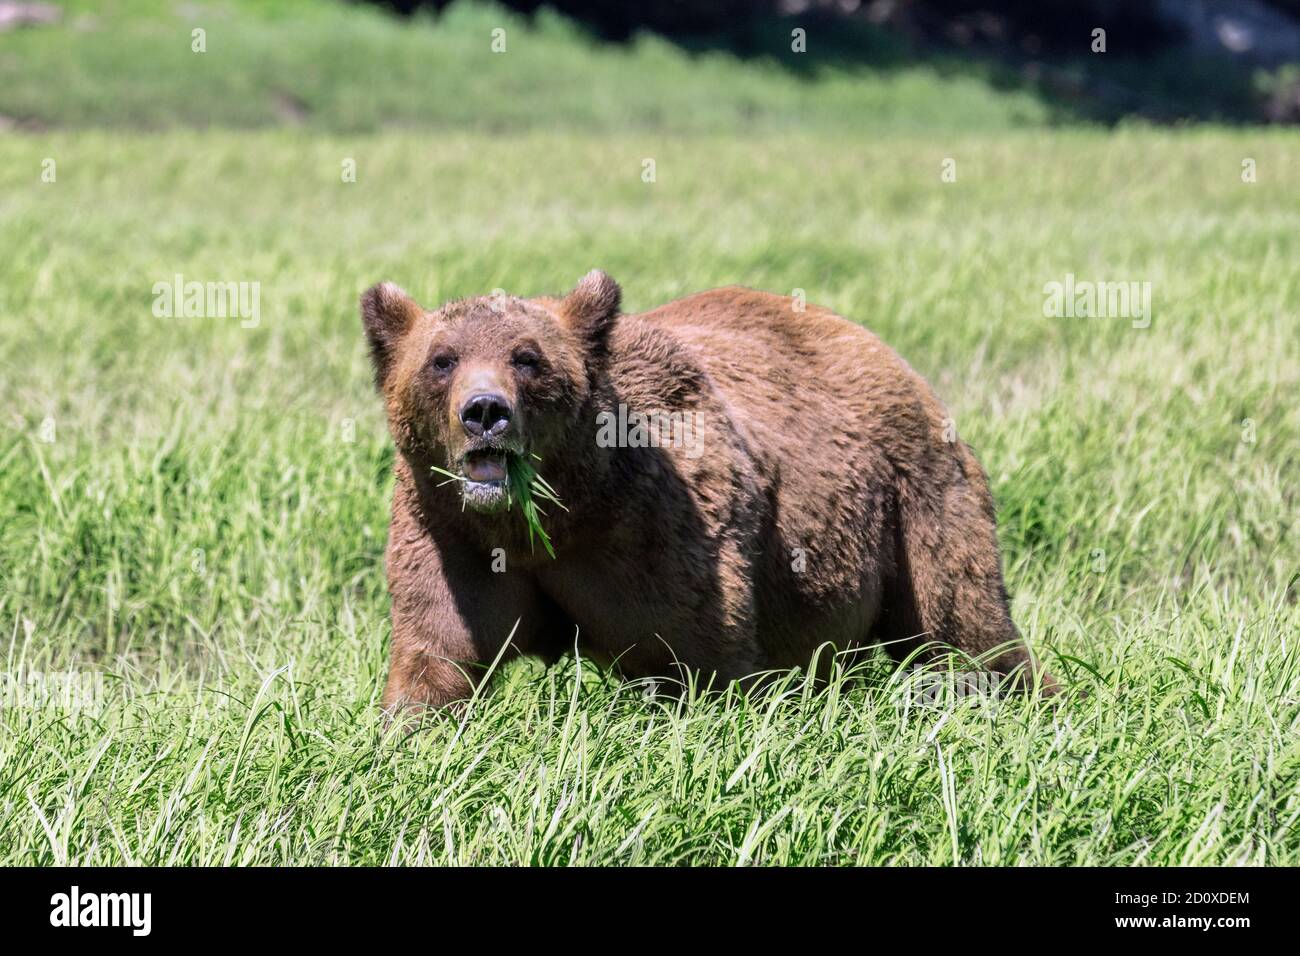 Adult grizzly bear feeding in a sedge grass meadow, Khutzeymateen, BC Stock Photo